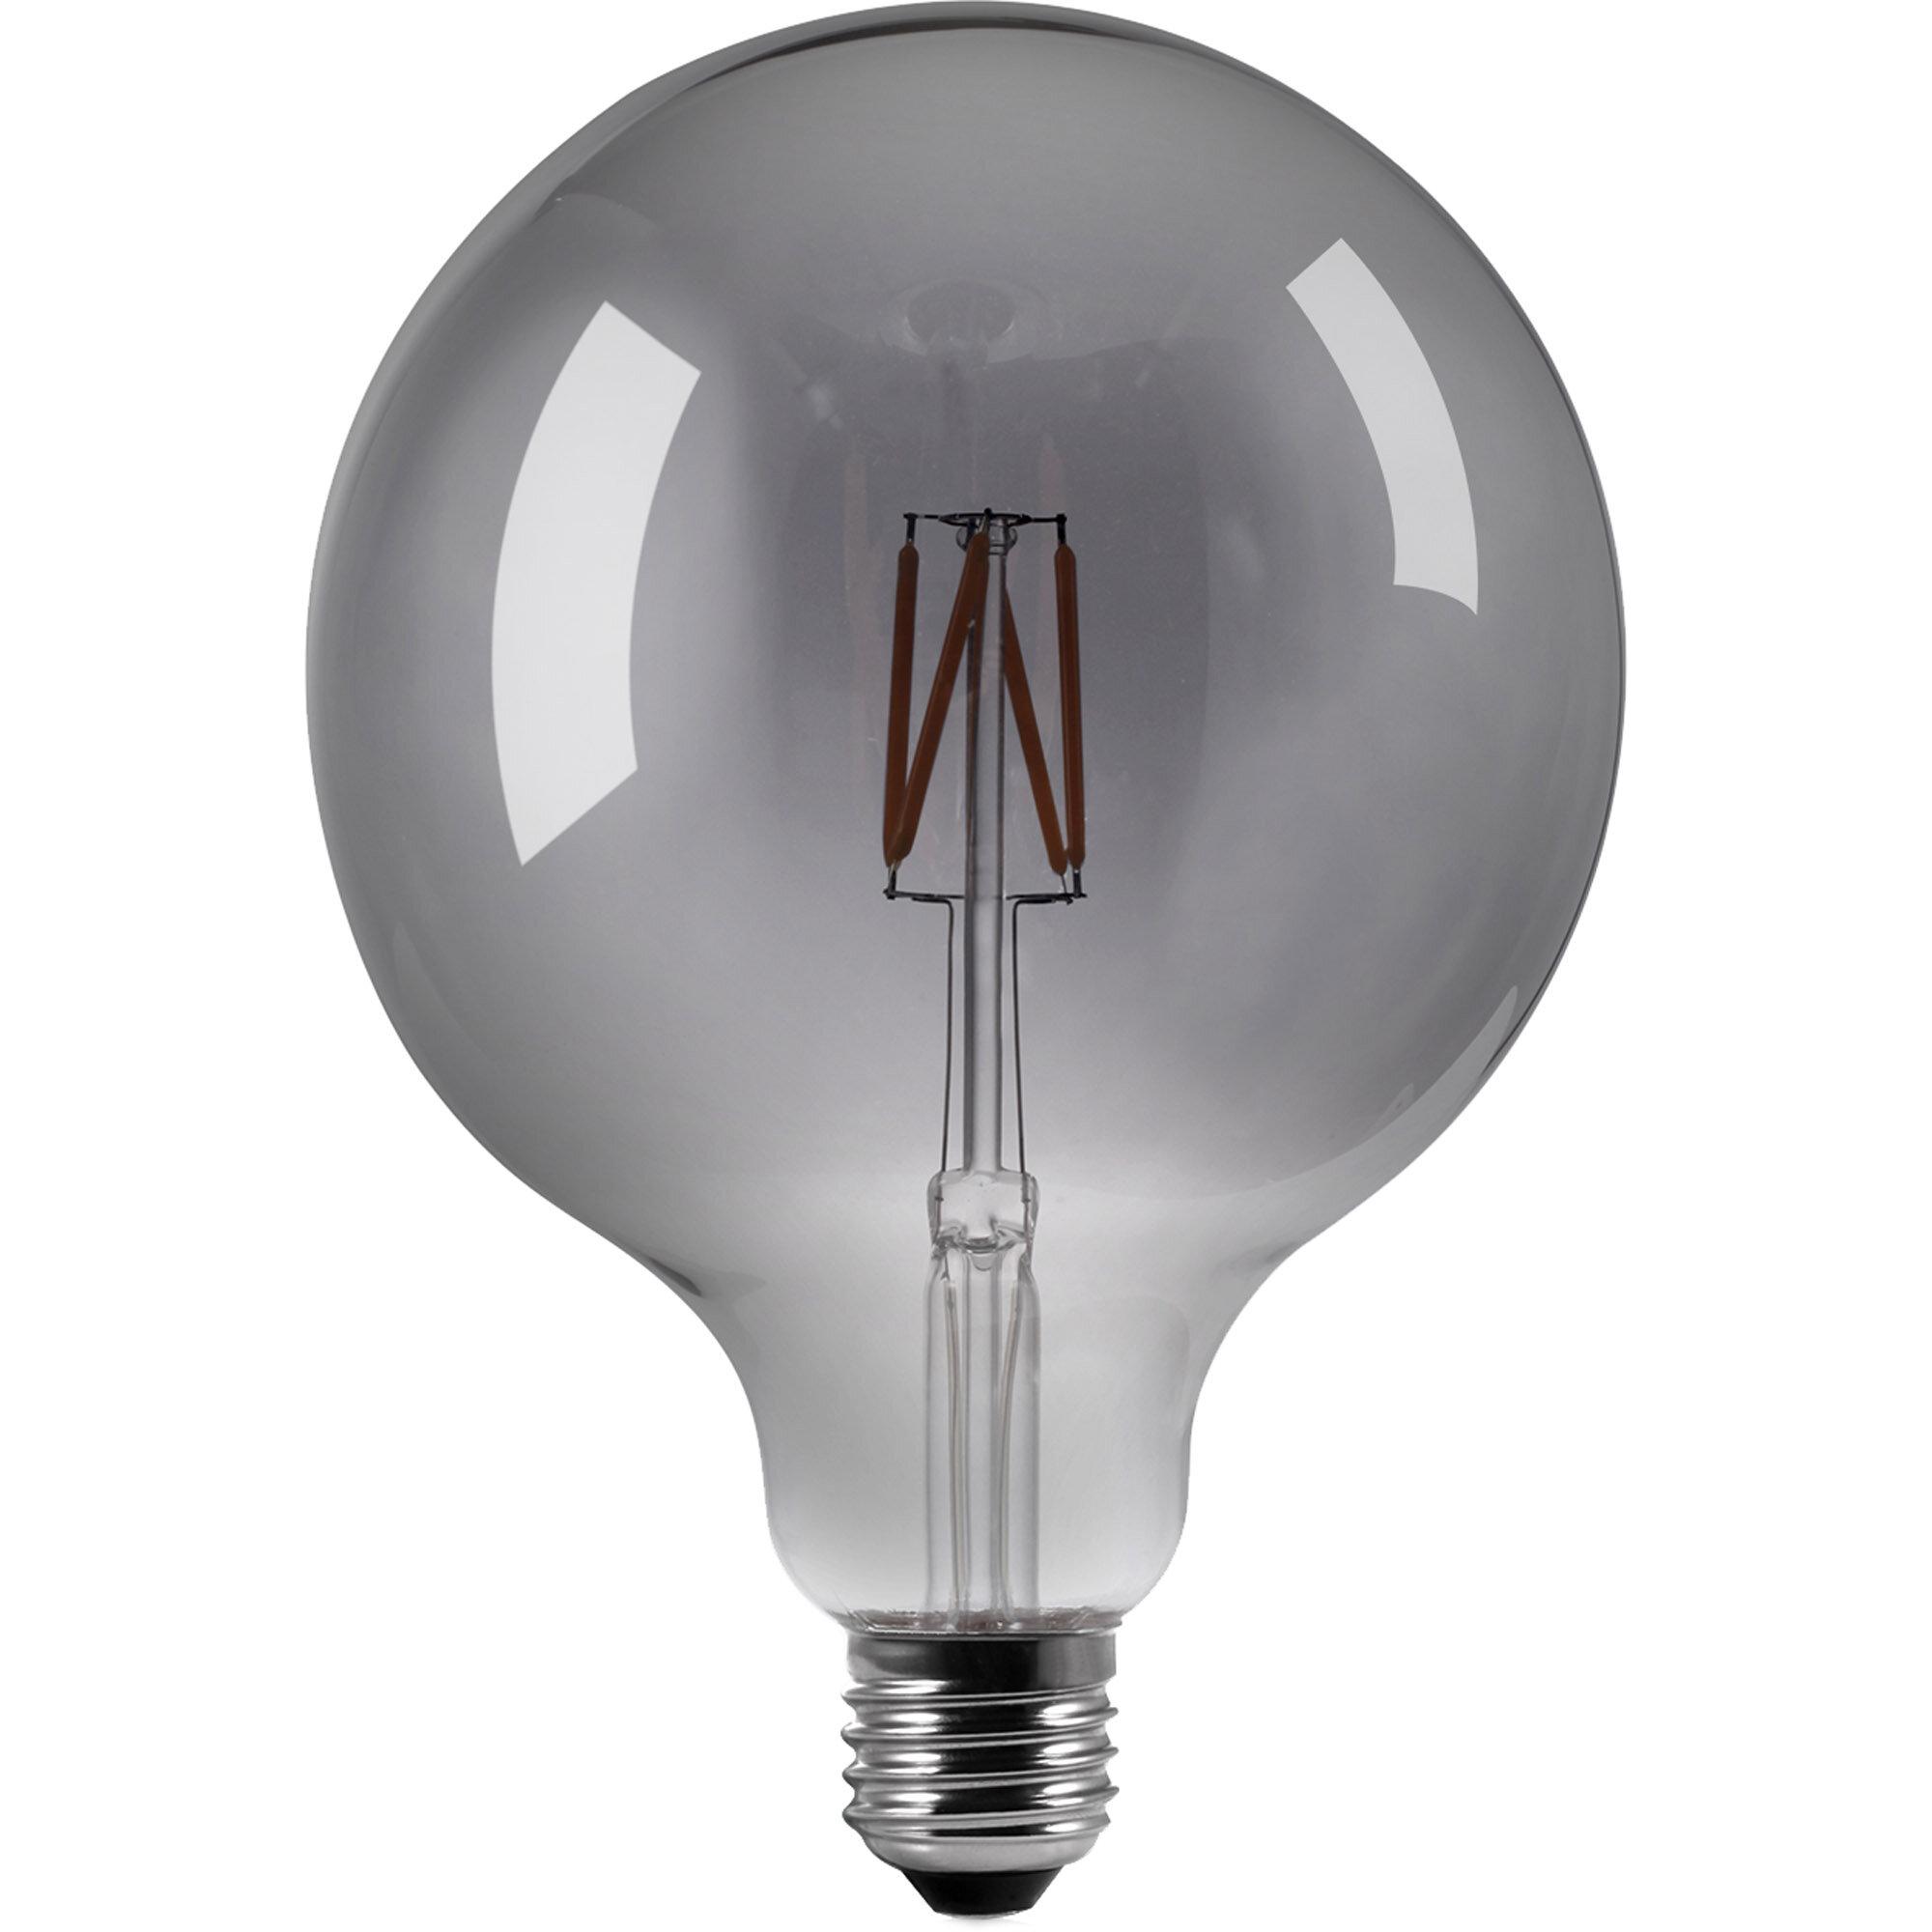  Sensio I LED-pære - kan dæmpes fra Trademark Living i Glas (Varenr: Q3010)